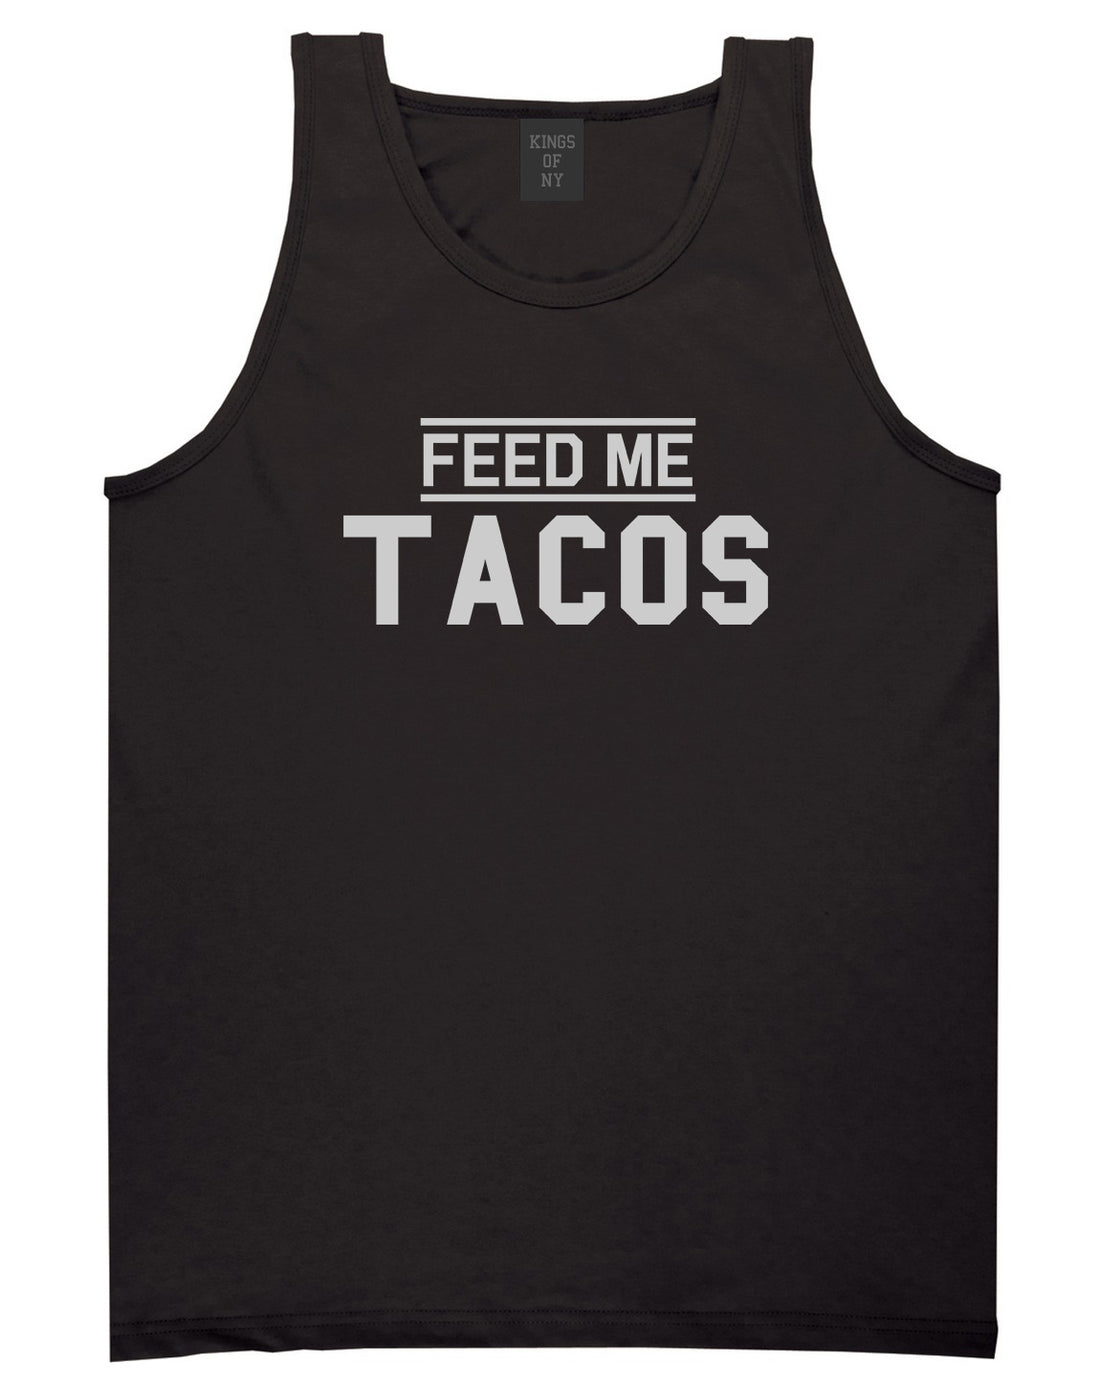 Feed Me Tacos Mens Black Tank Top Shirt by KINGS OF NY